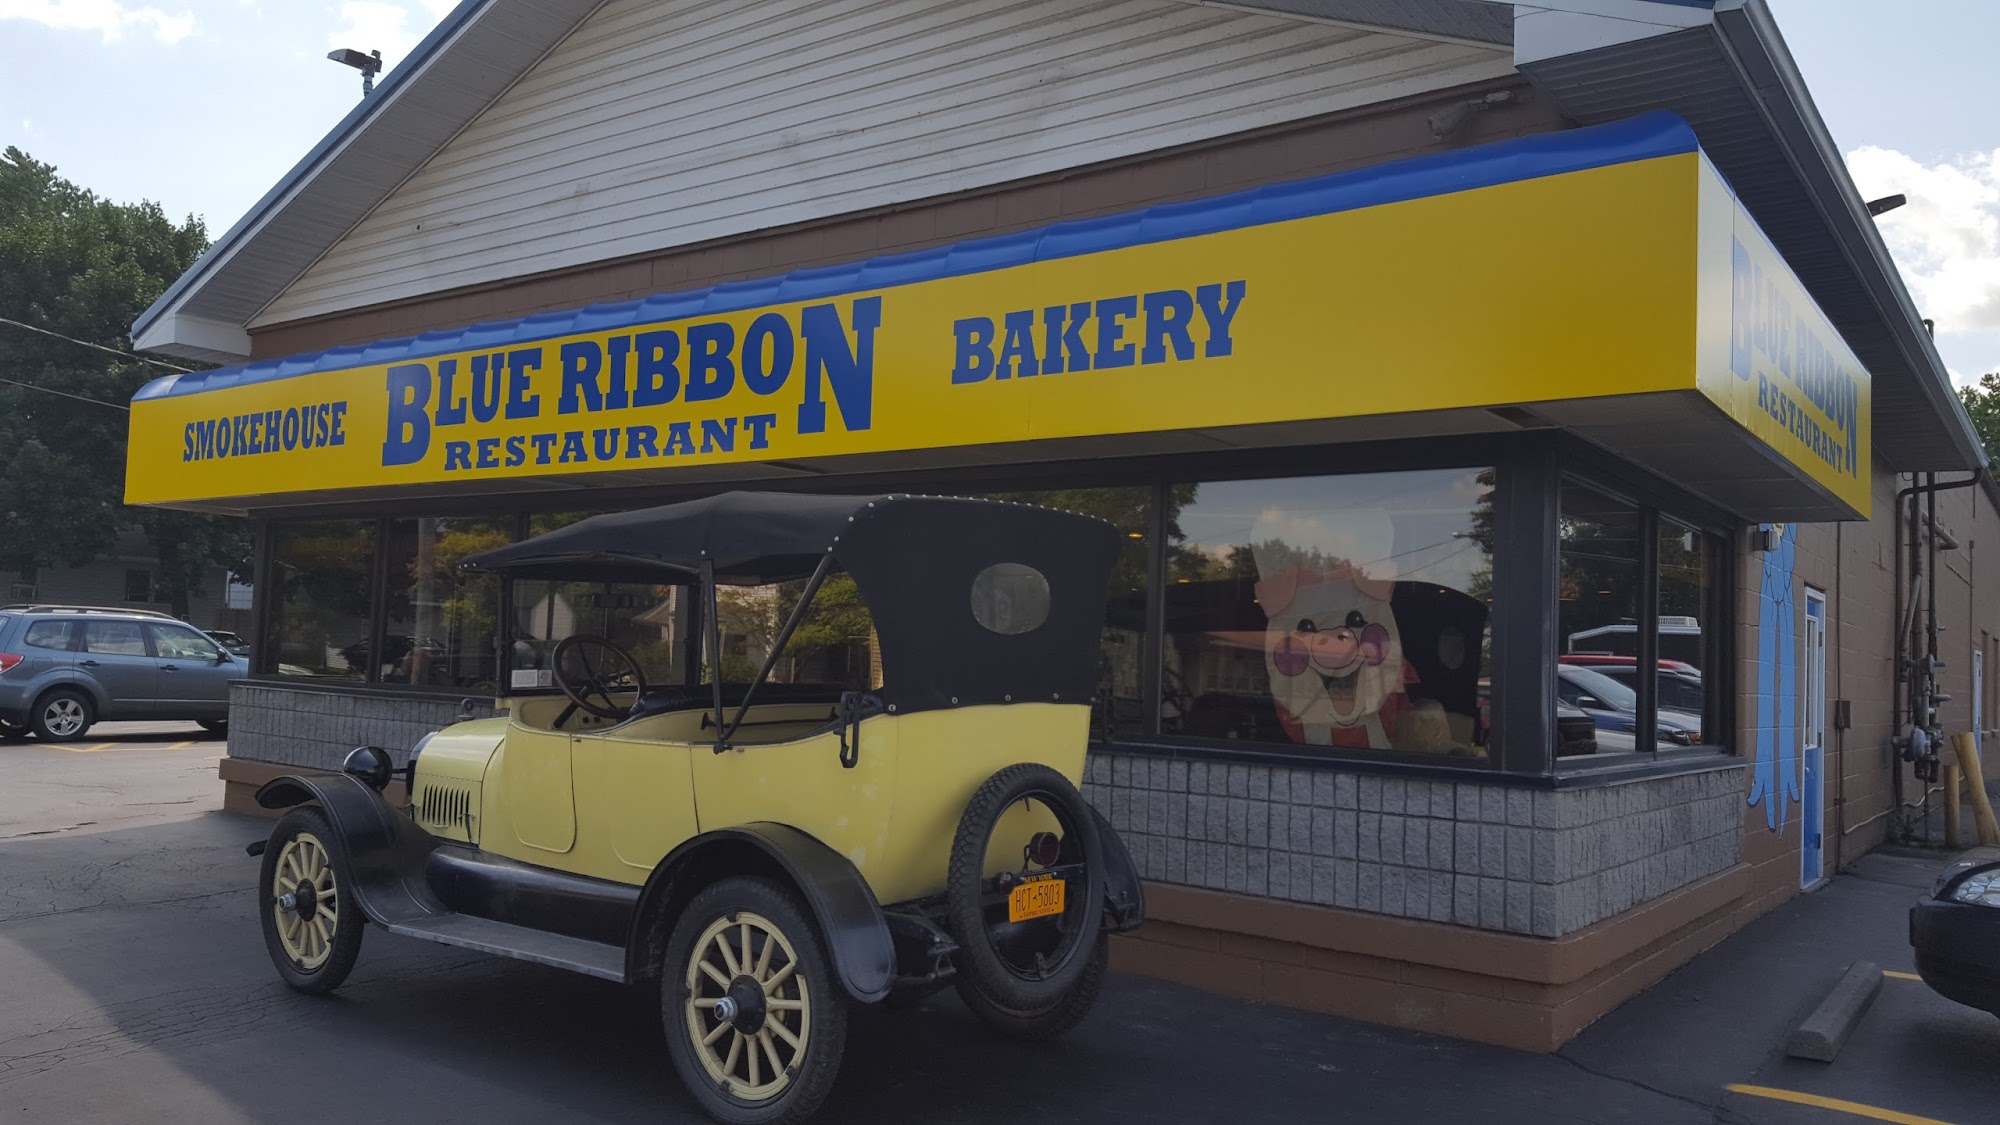 Blue Ribbon Smokehouse Restaurant & Bakery